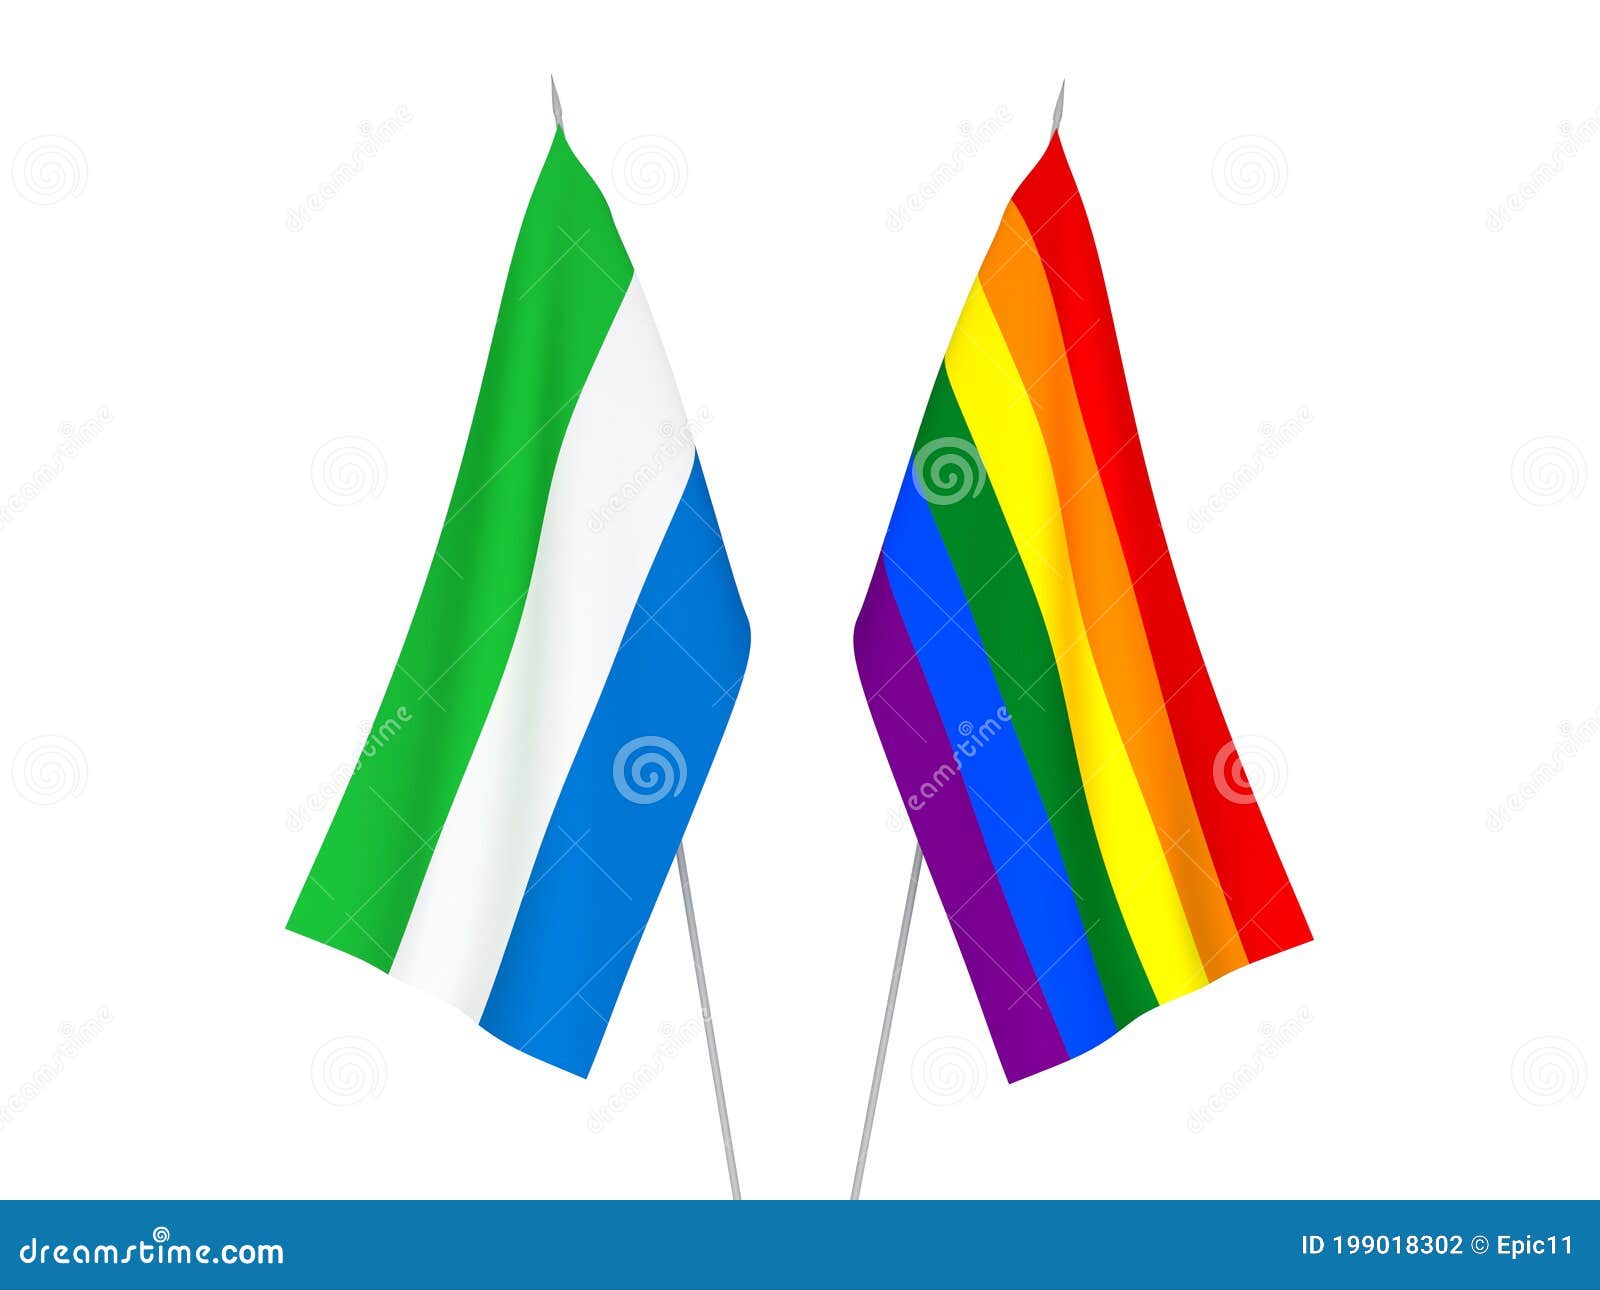 Sierra Leone and Rainbow Gay Pride Flags Stock Illustration ...